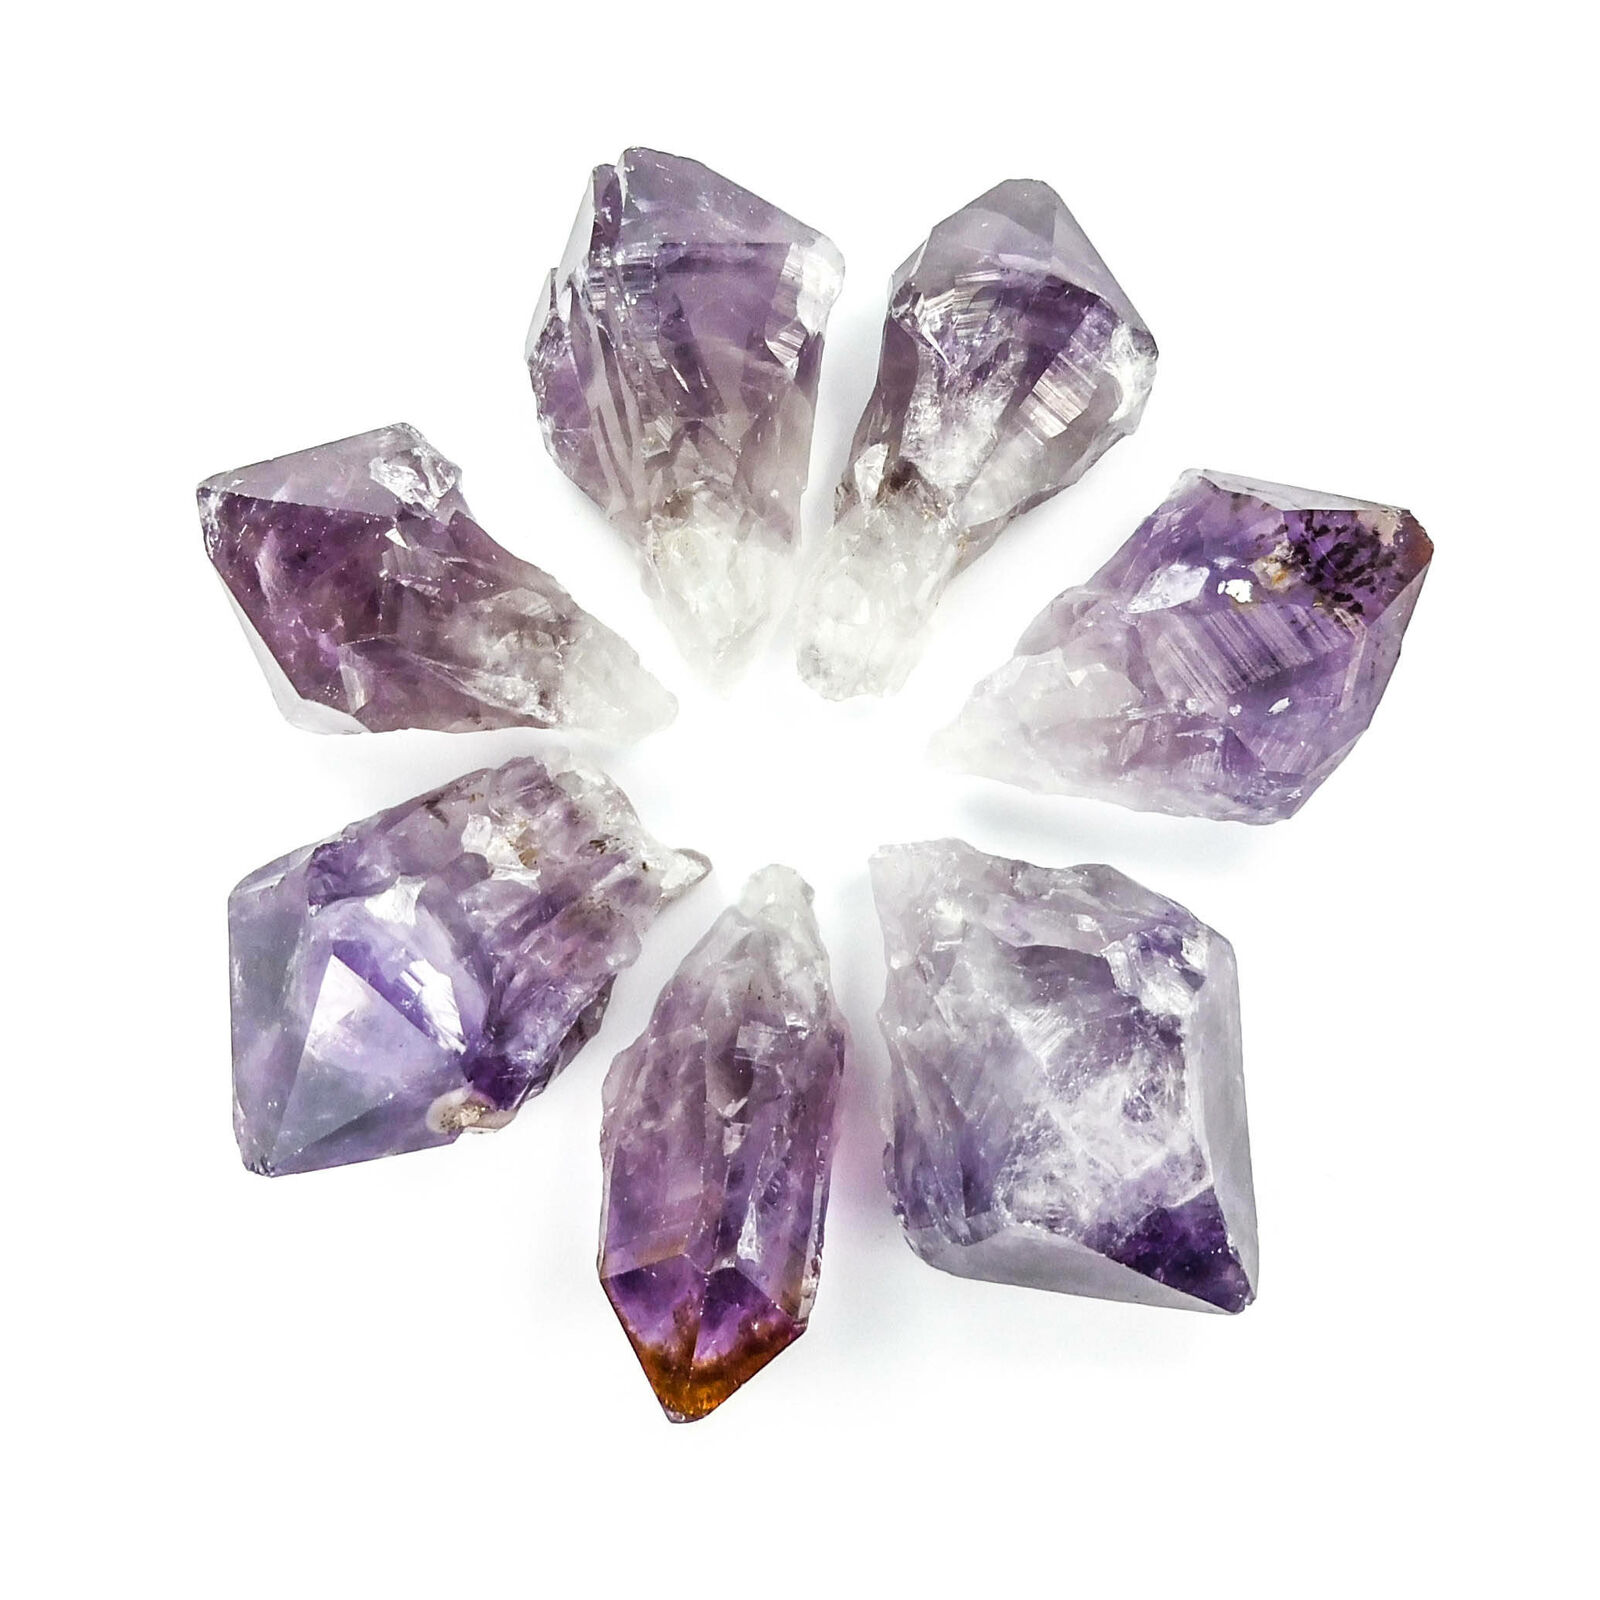 Large Dark Purple Amethyst Crystal Points (3 Pcs) Grade A Large Raw Purple